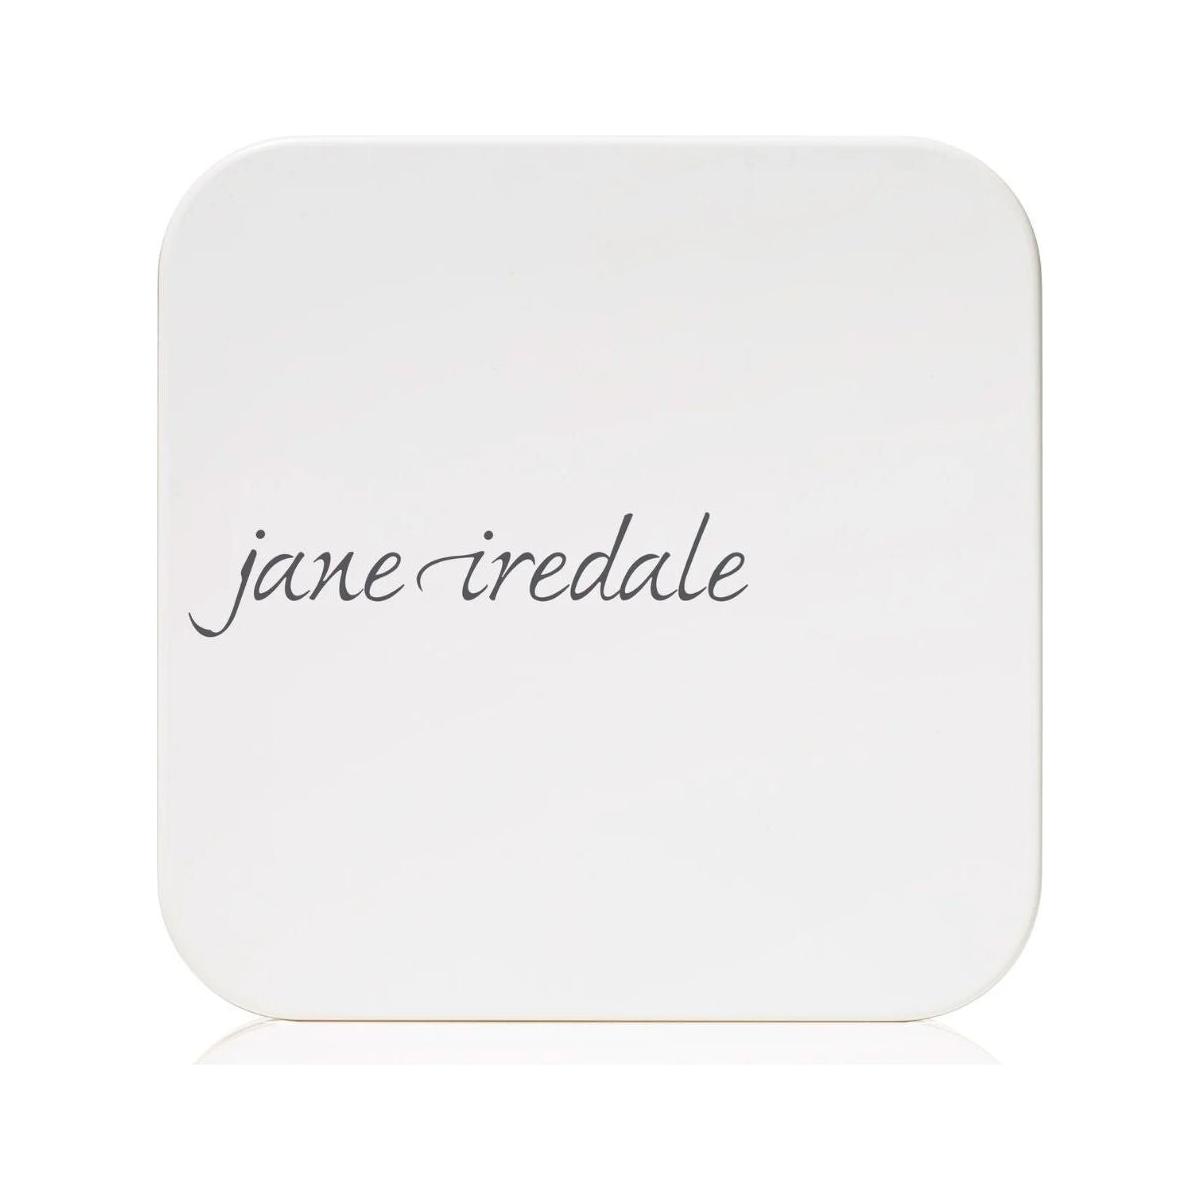 Jane Iredale | Refillable Empty Compact - DG International Ventures Limited